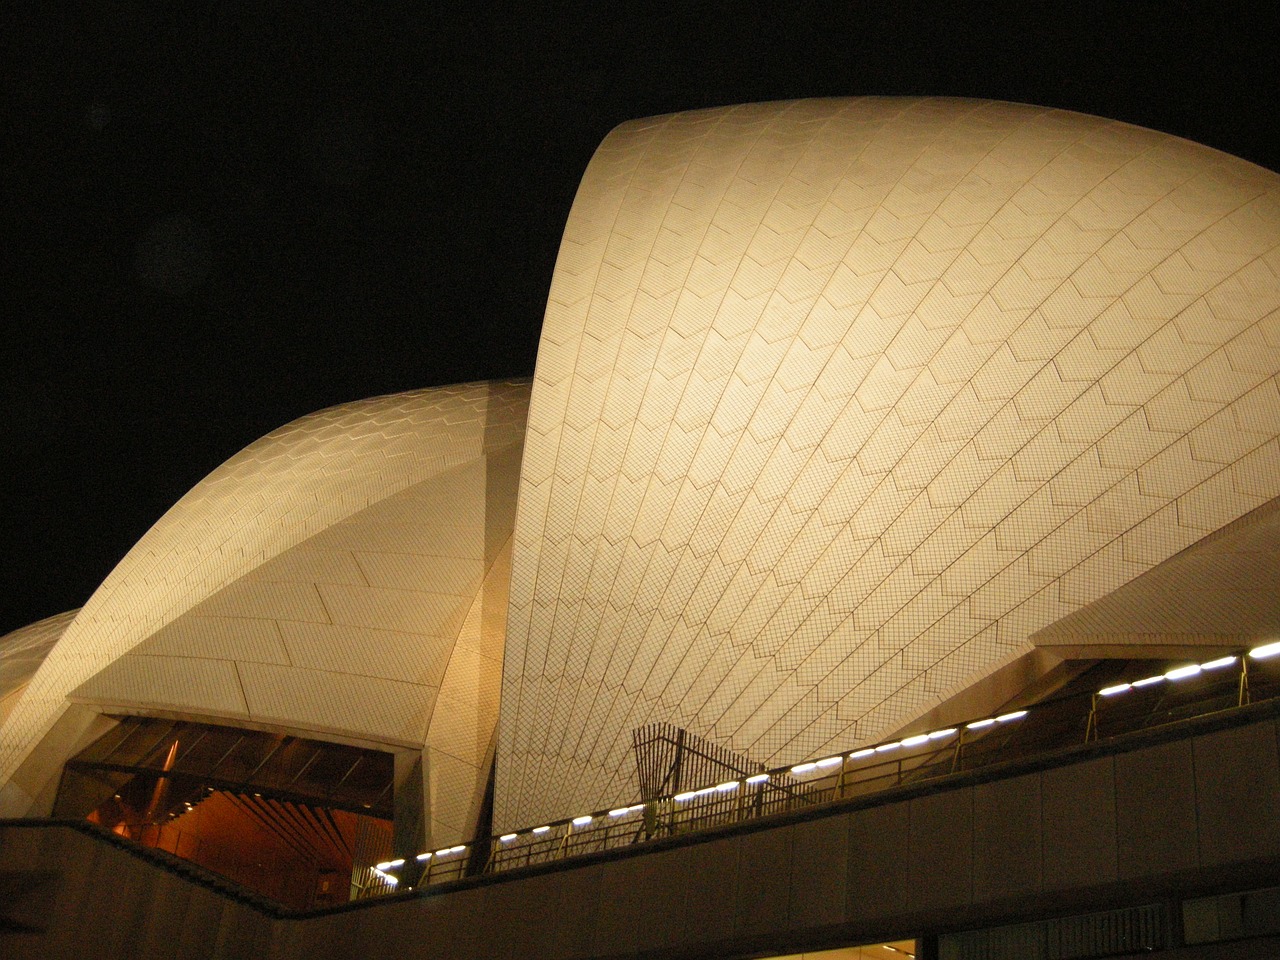 Sidnėjaus Operos Rūmai, Pastatas, Architektūra, Meno Centras, Australia, Jørn Utzon, Bennelong Point, Sidnėjaus Uostas, Sidnėjus, Opera